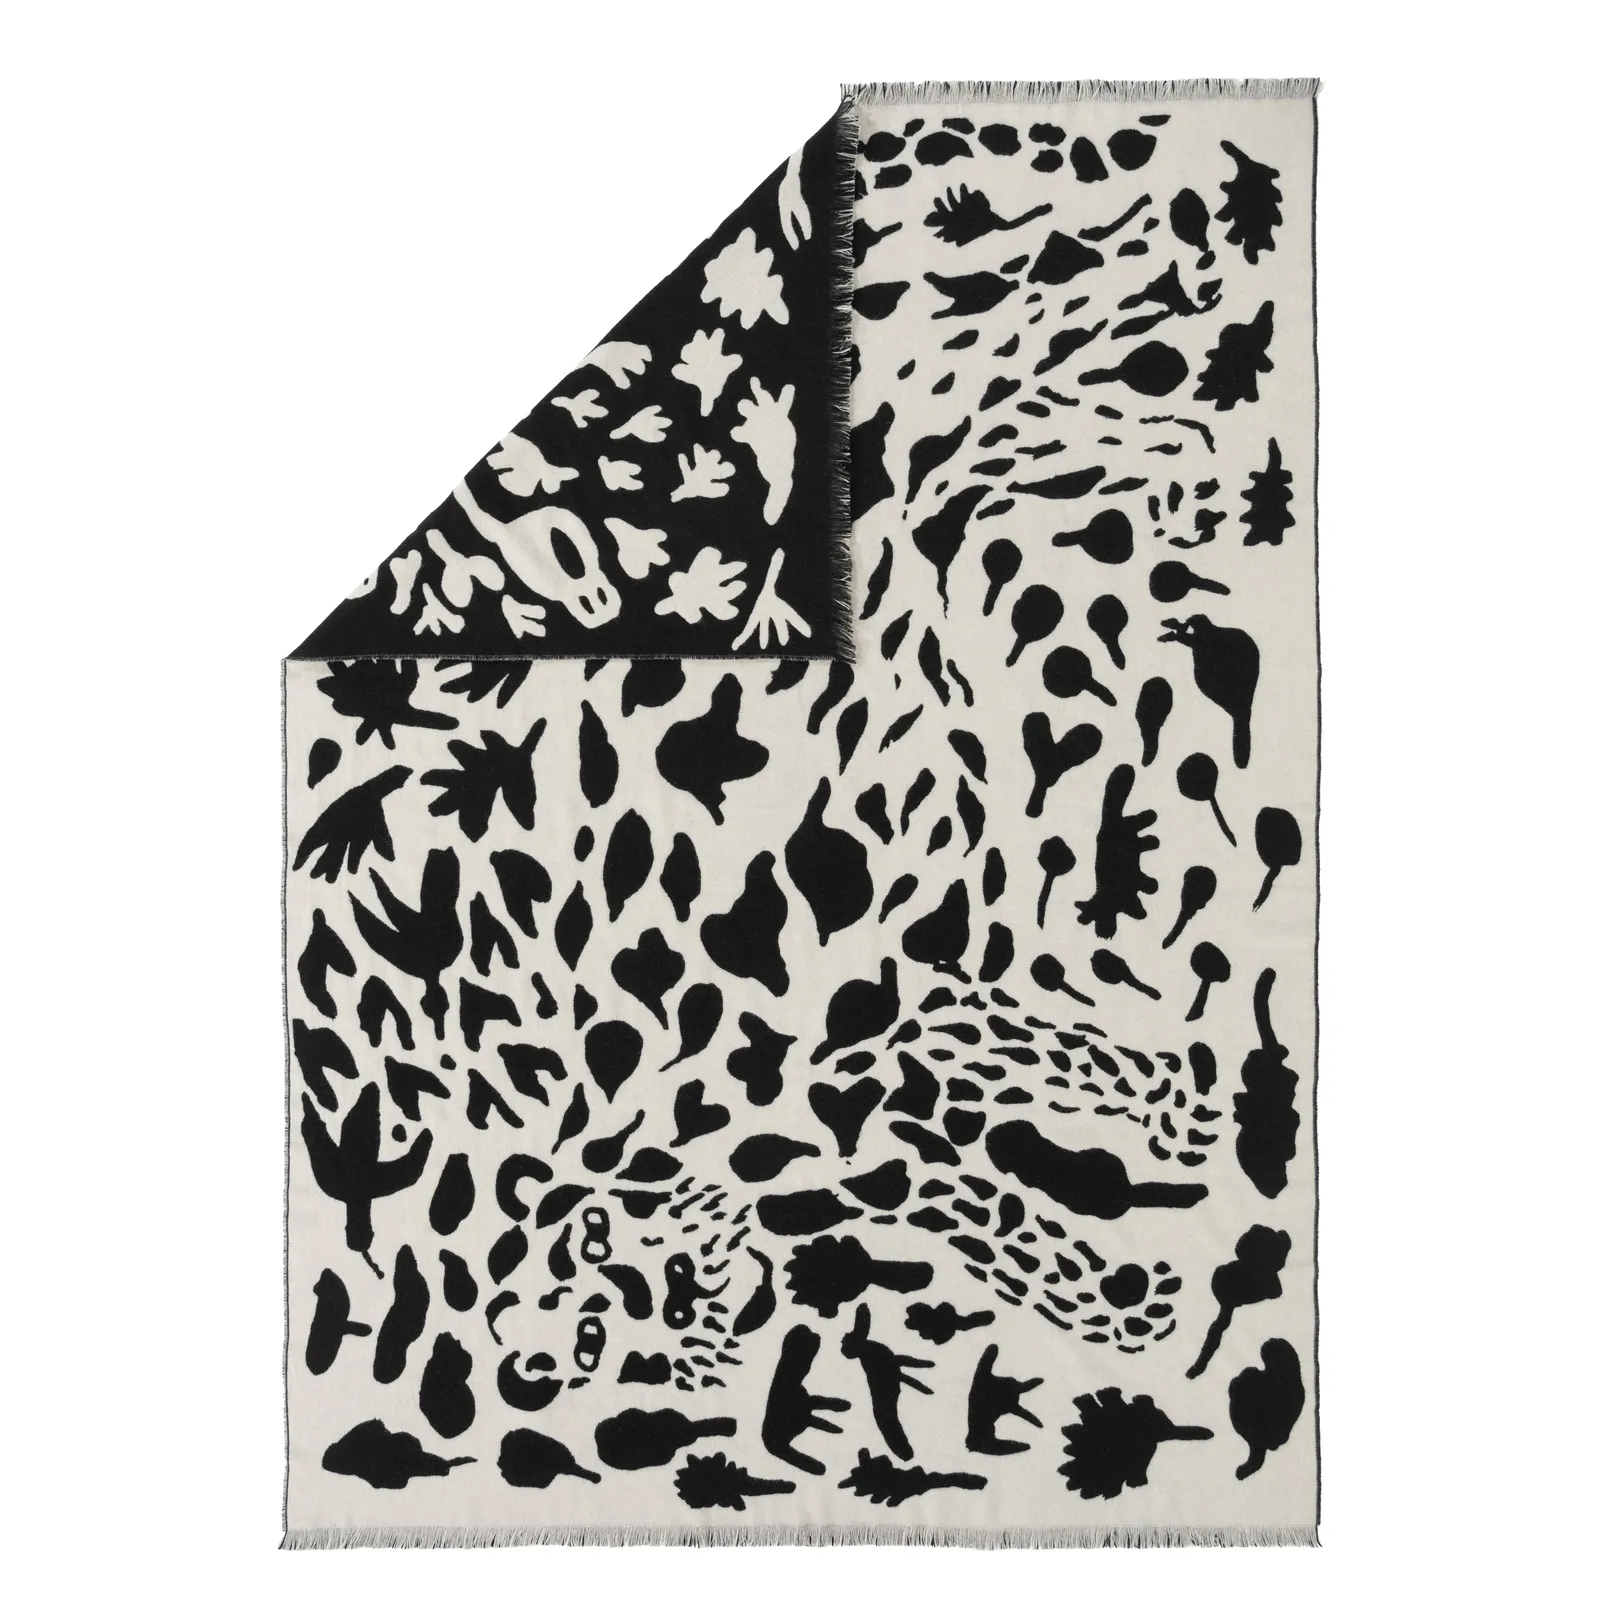 OTC blanket 180x130cm Cheetah black